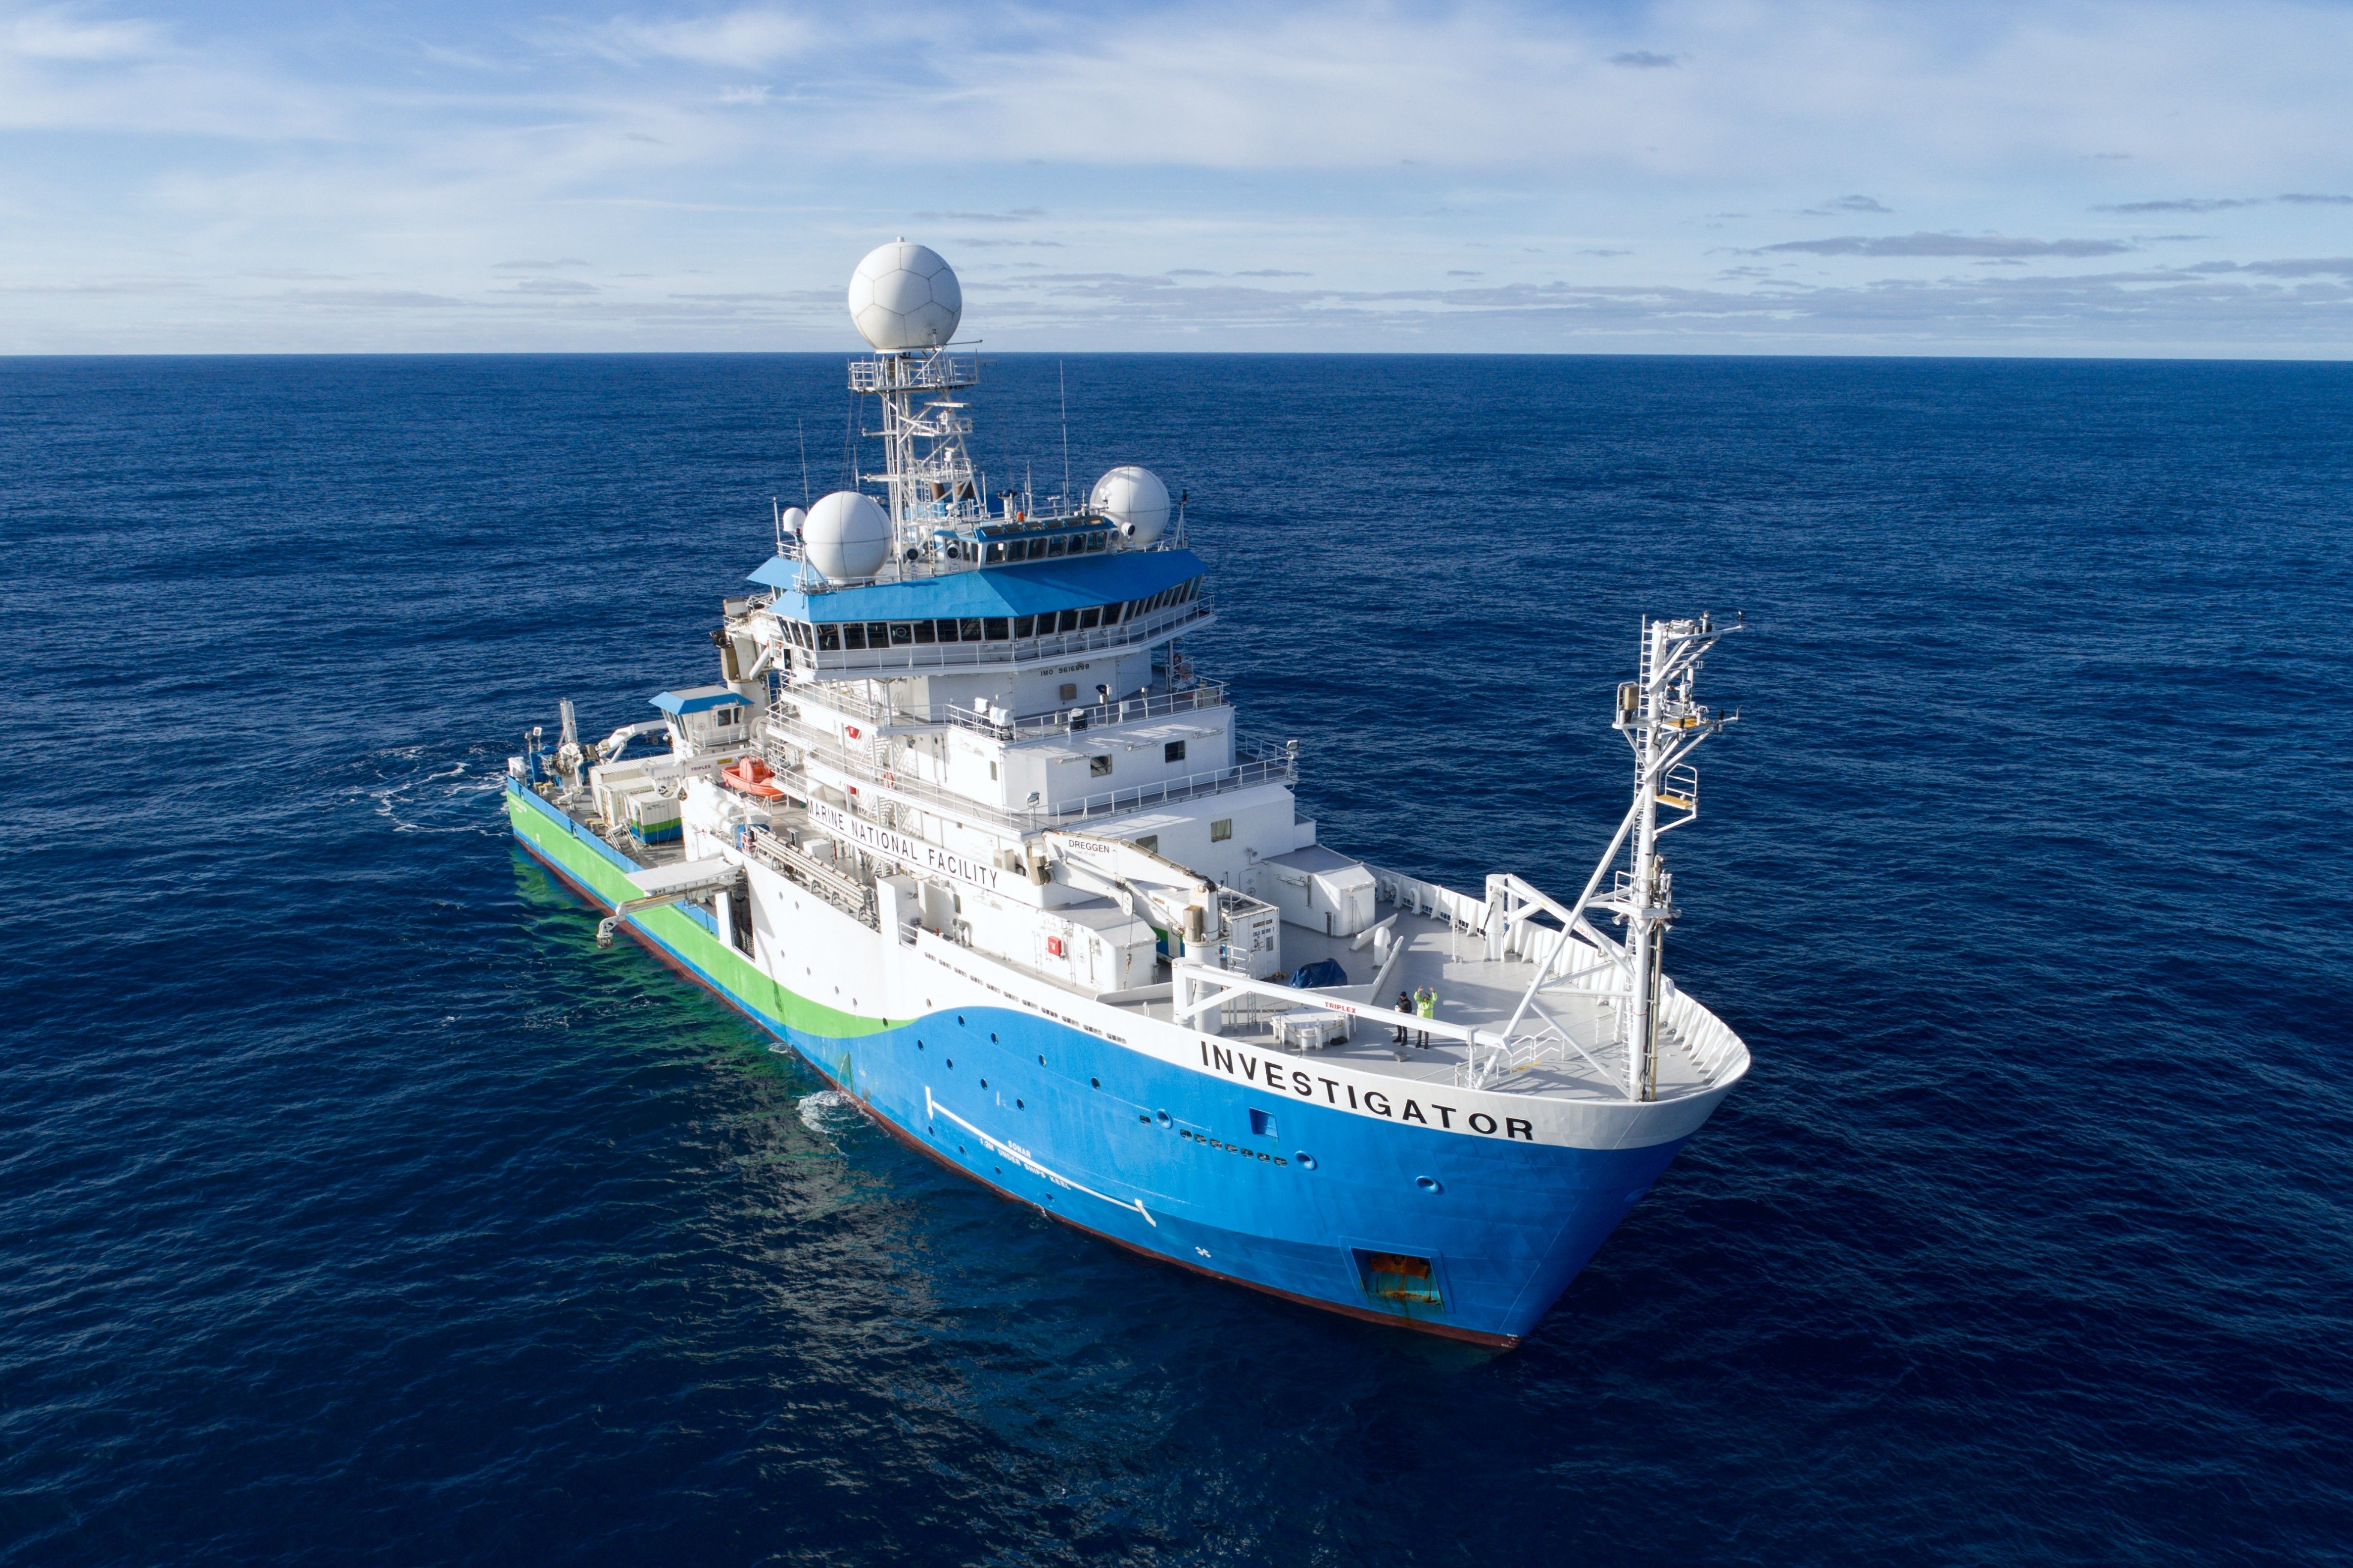 CSIRO voyage brings together international laboratories to help improve  ocean studies - CSIRO